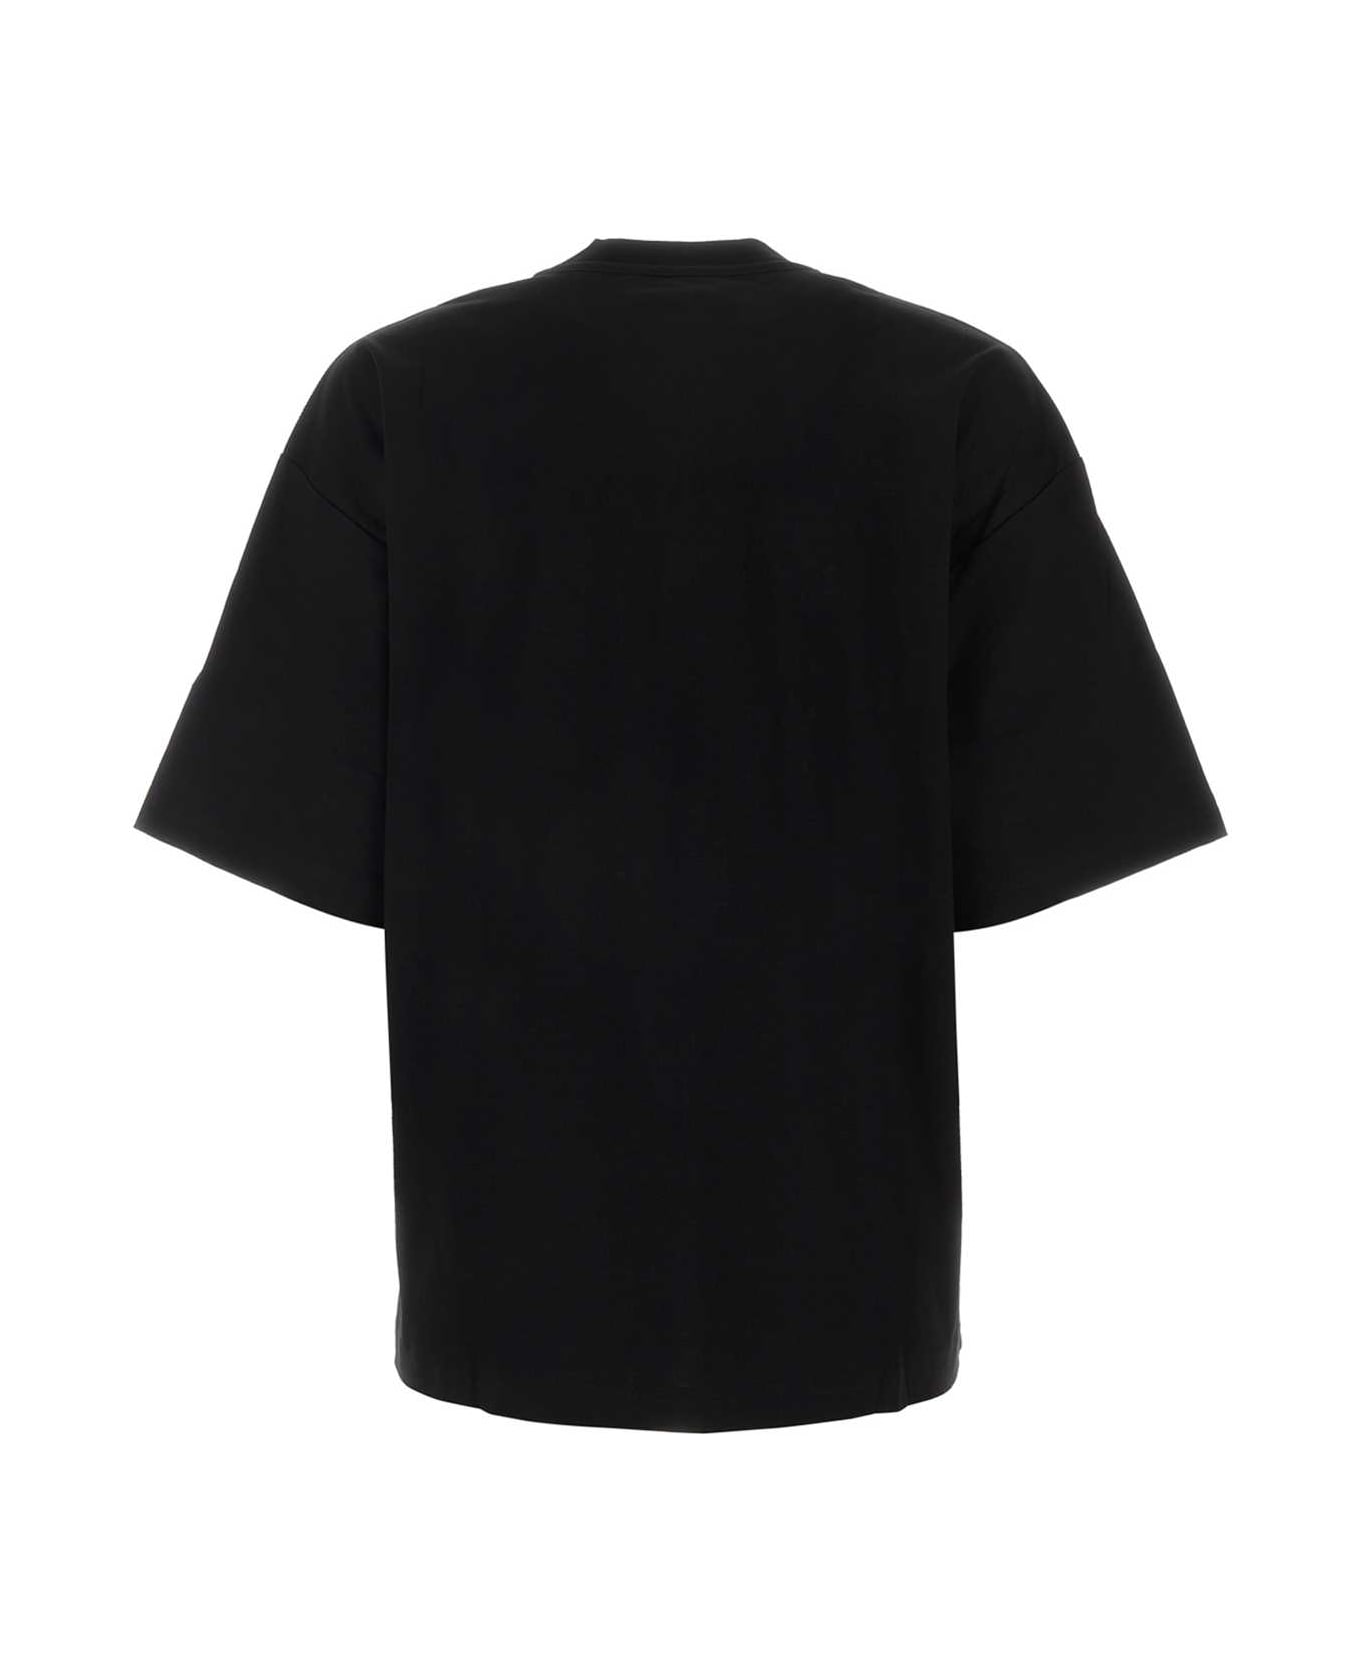 Lanvin Black Cotton T-shirt - Black